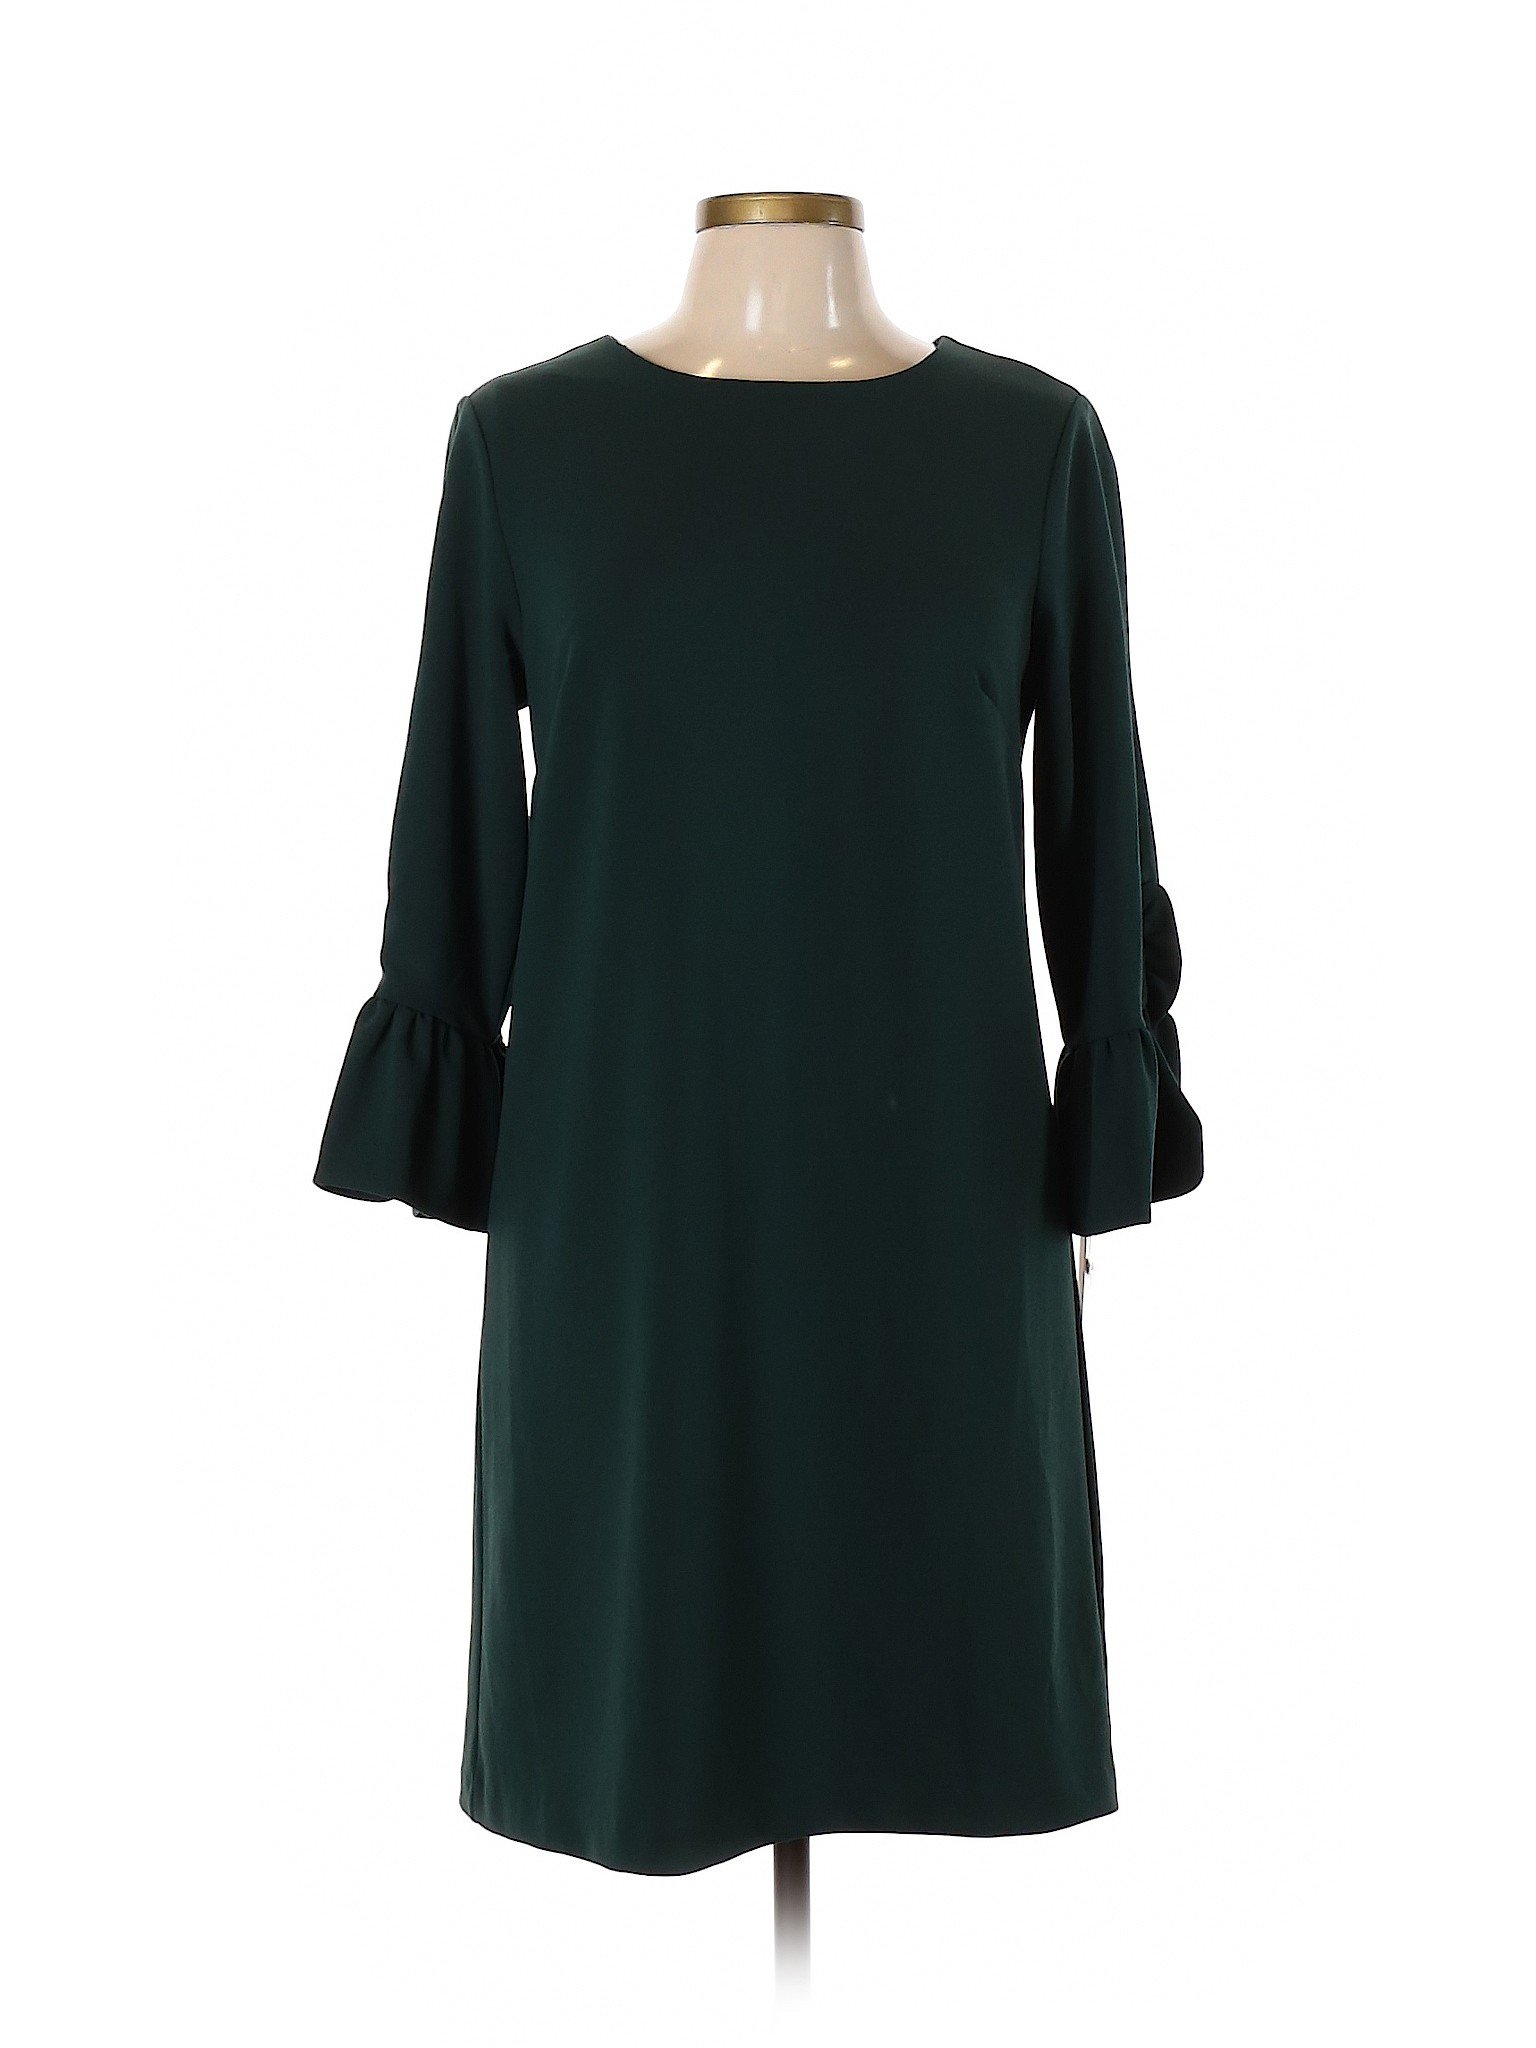 NANETTE Nanette Lepore Solid Green Casual Dress Size 6 - 85% off | thredUP